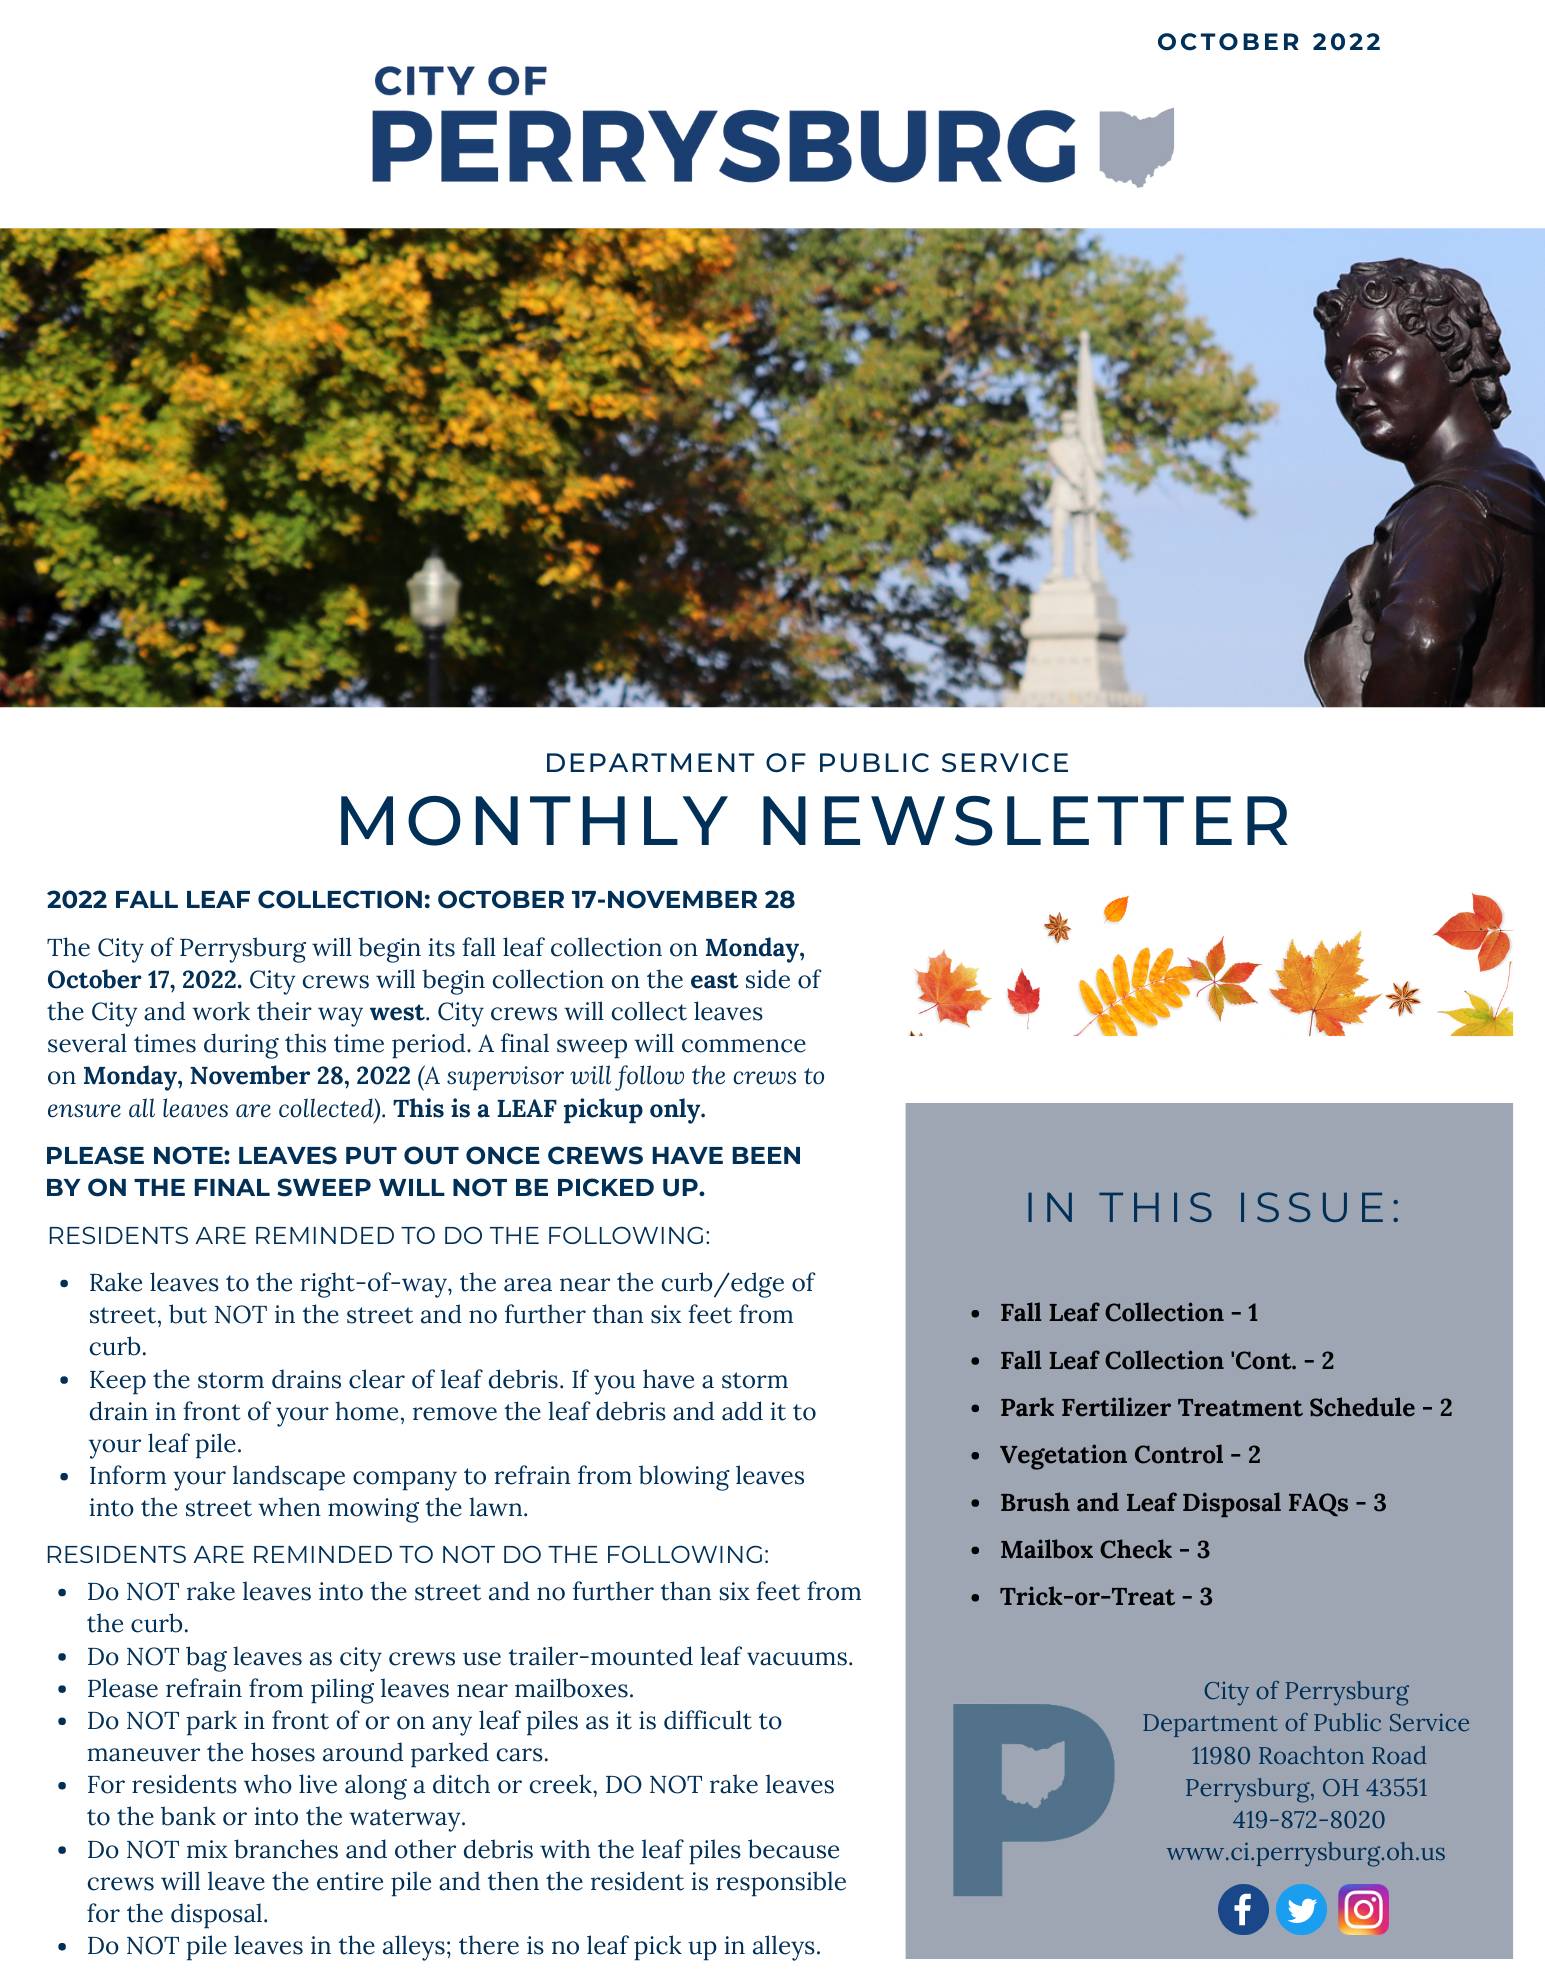 October DPS Newsletter - Copy